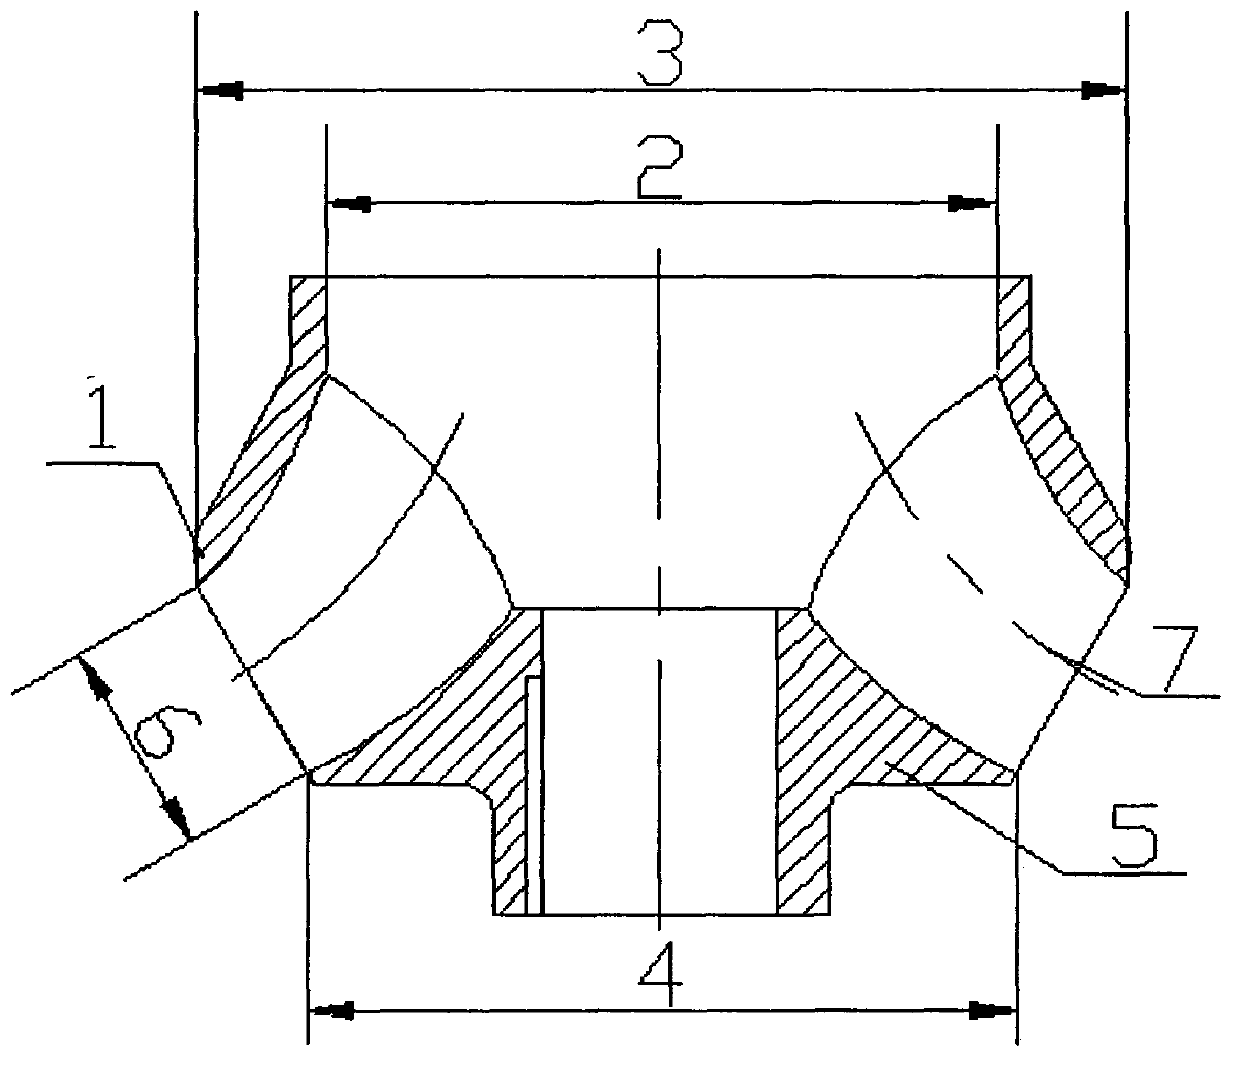 Design method of nuclear main pump impeller